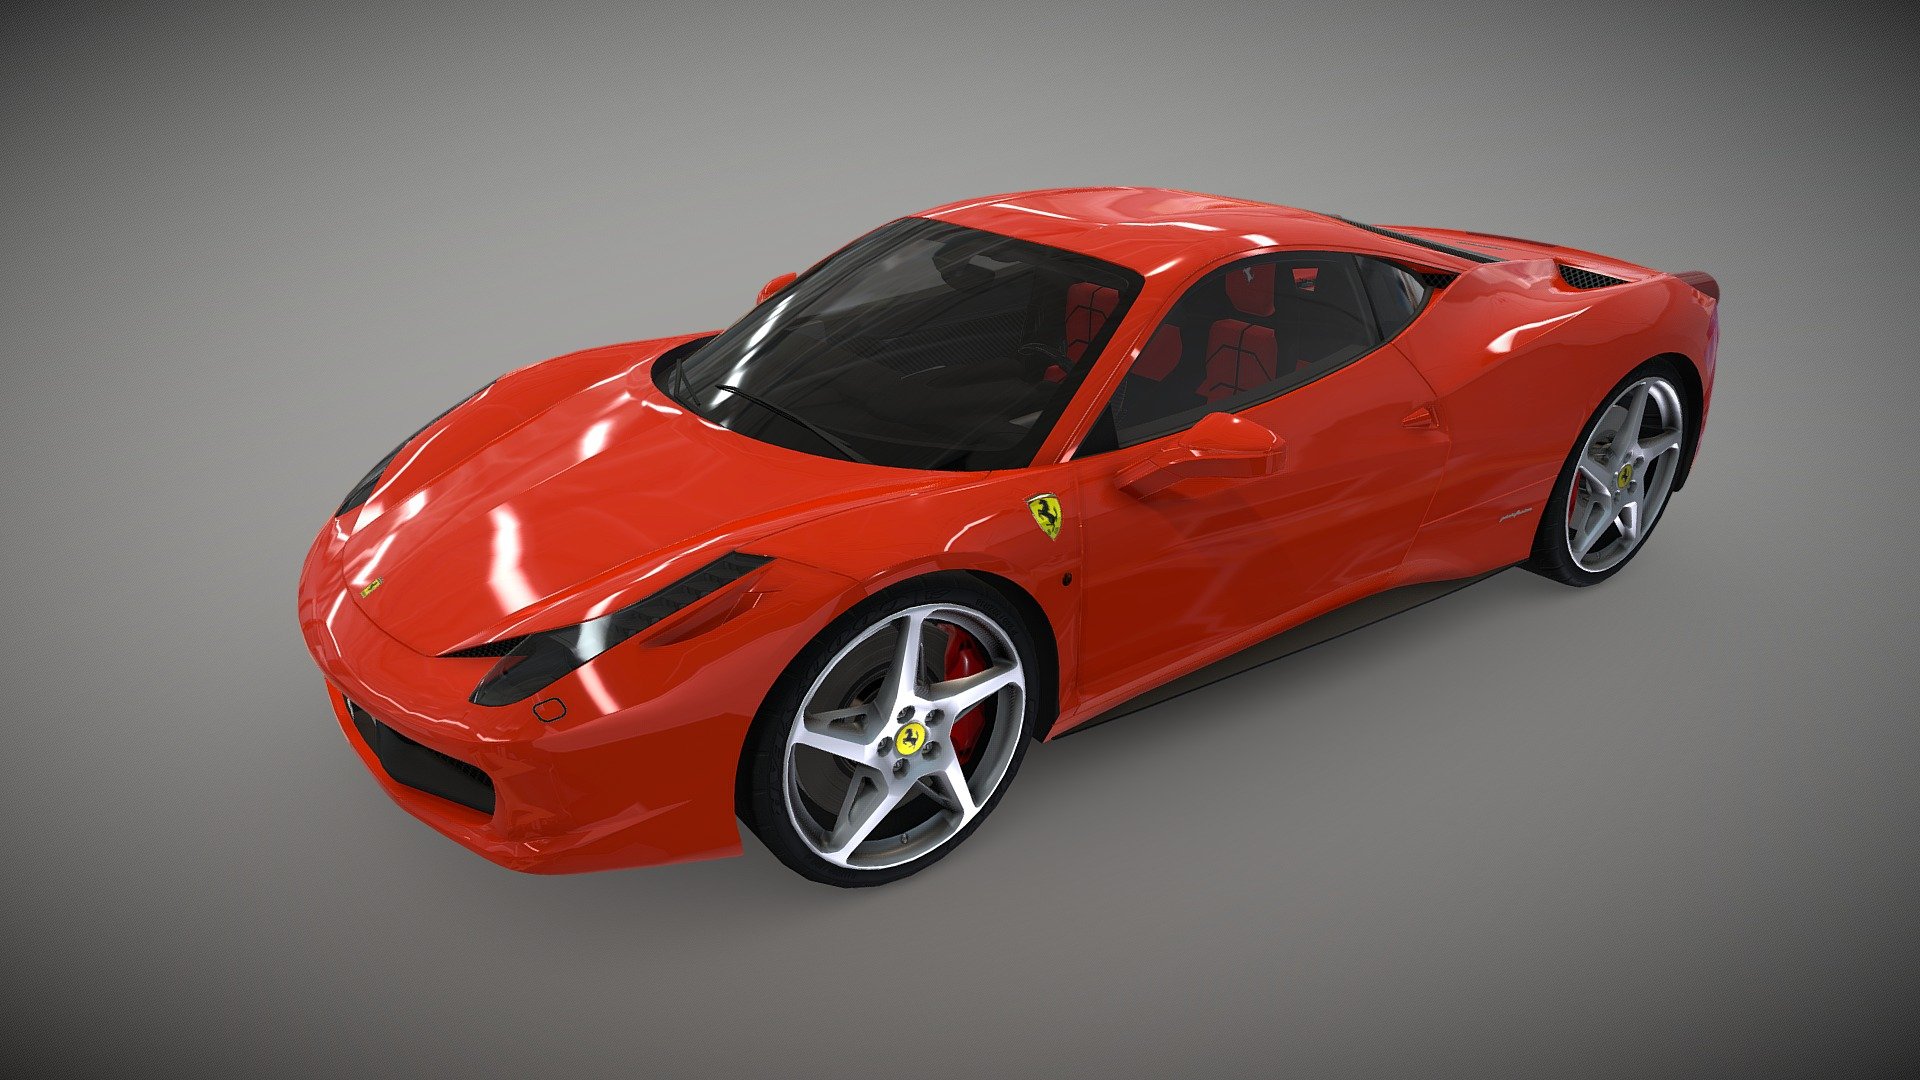 Tesla Model S - Game ready model - Mid poly mesh - Ferrari 458 - Buy Royalty Free 3D model by thegreen3d 3d model